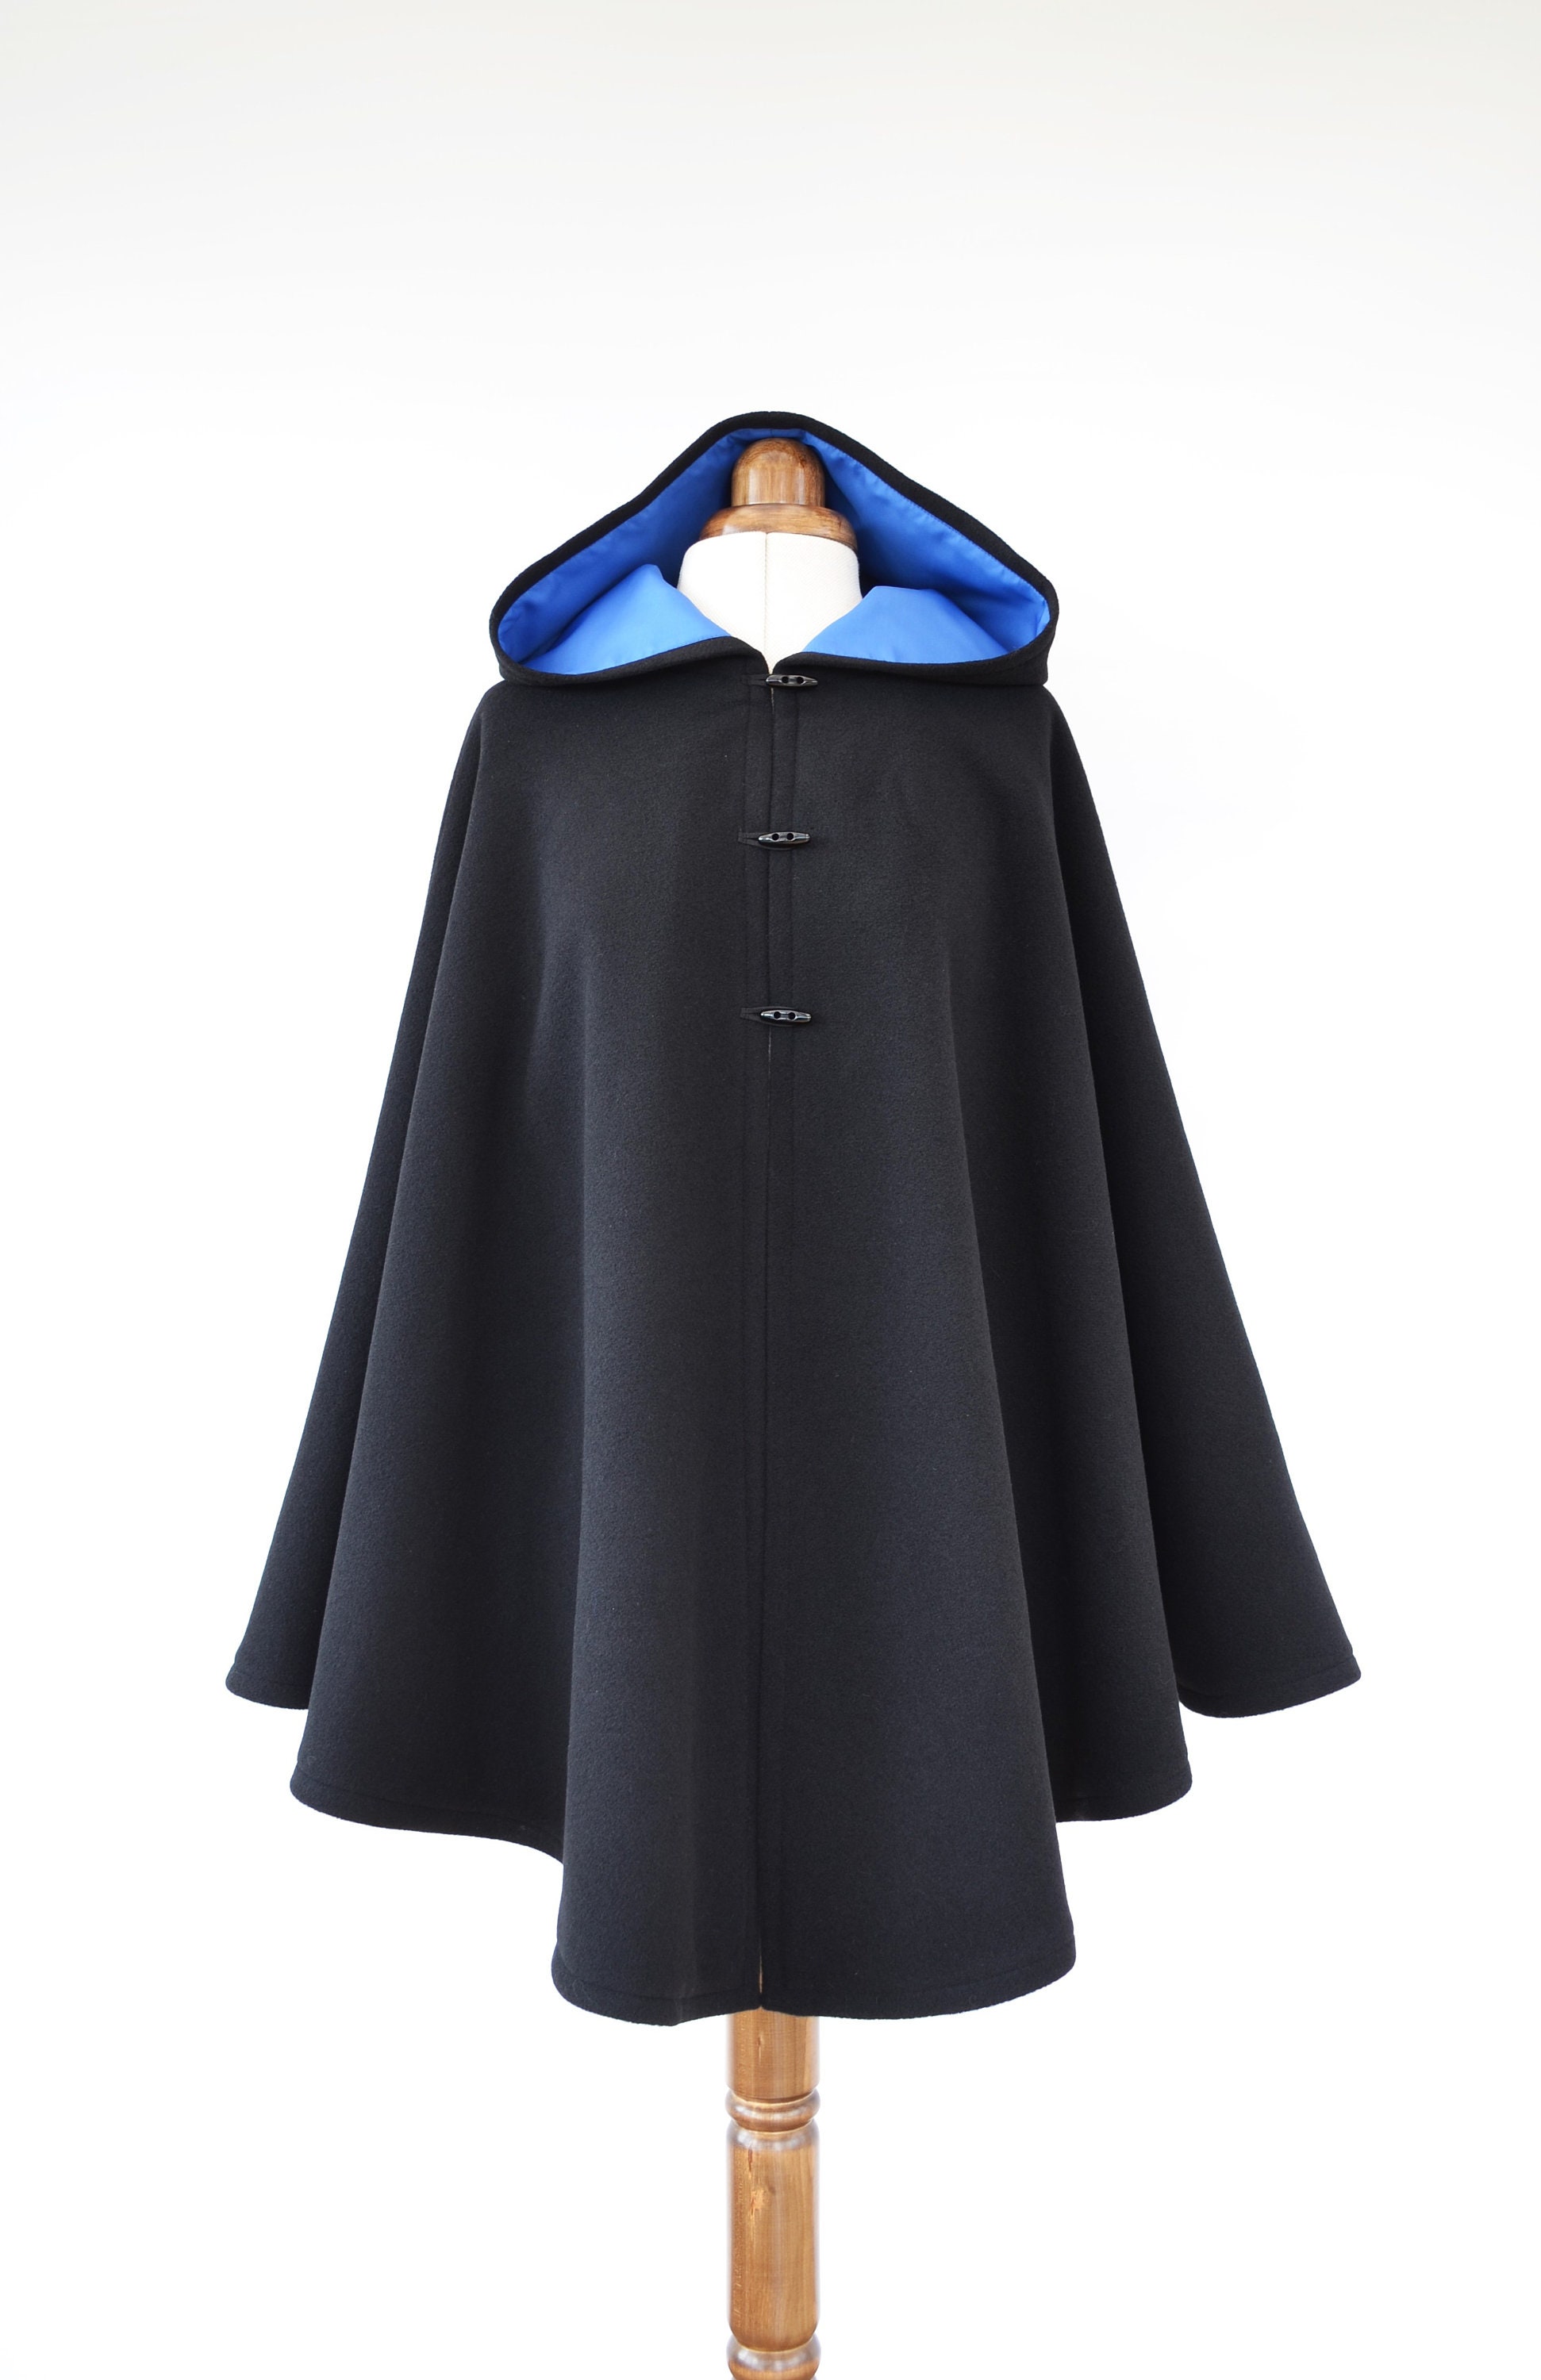 Black Wool Hooded Cloak Lined Hooded Cape Coat Medieval - Etsy UK